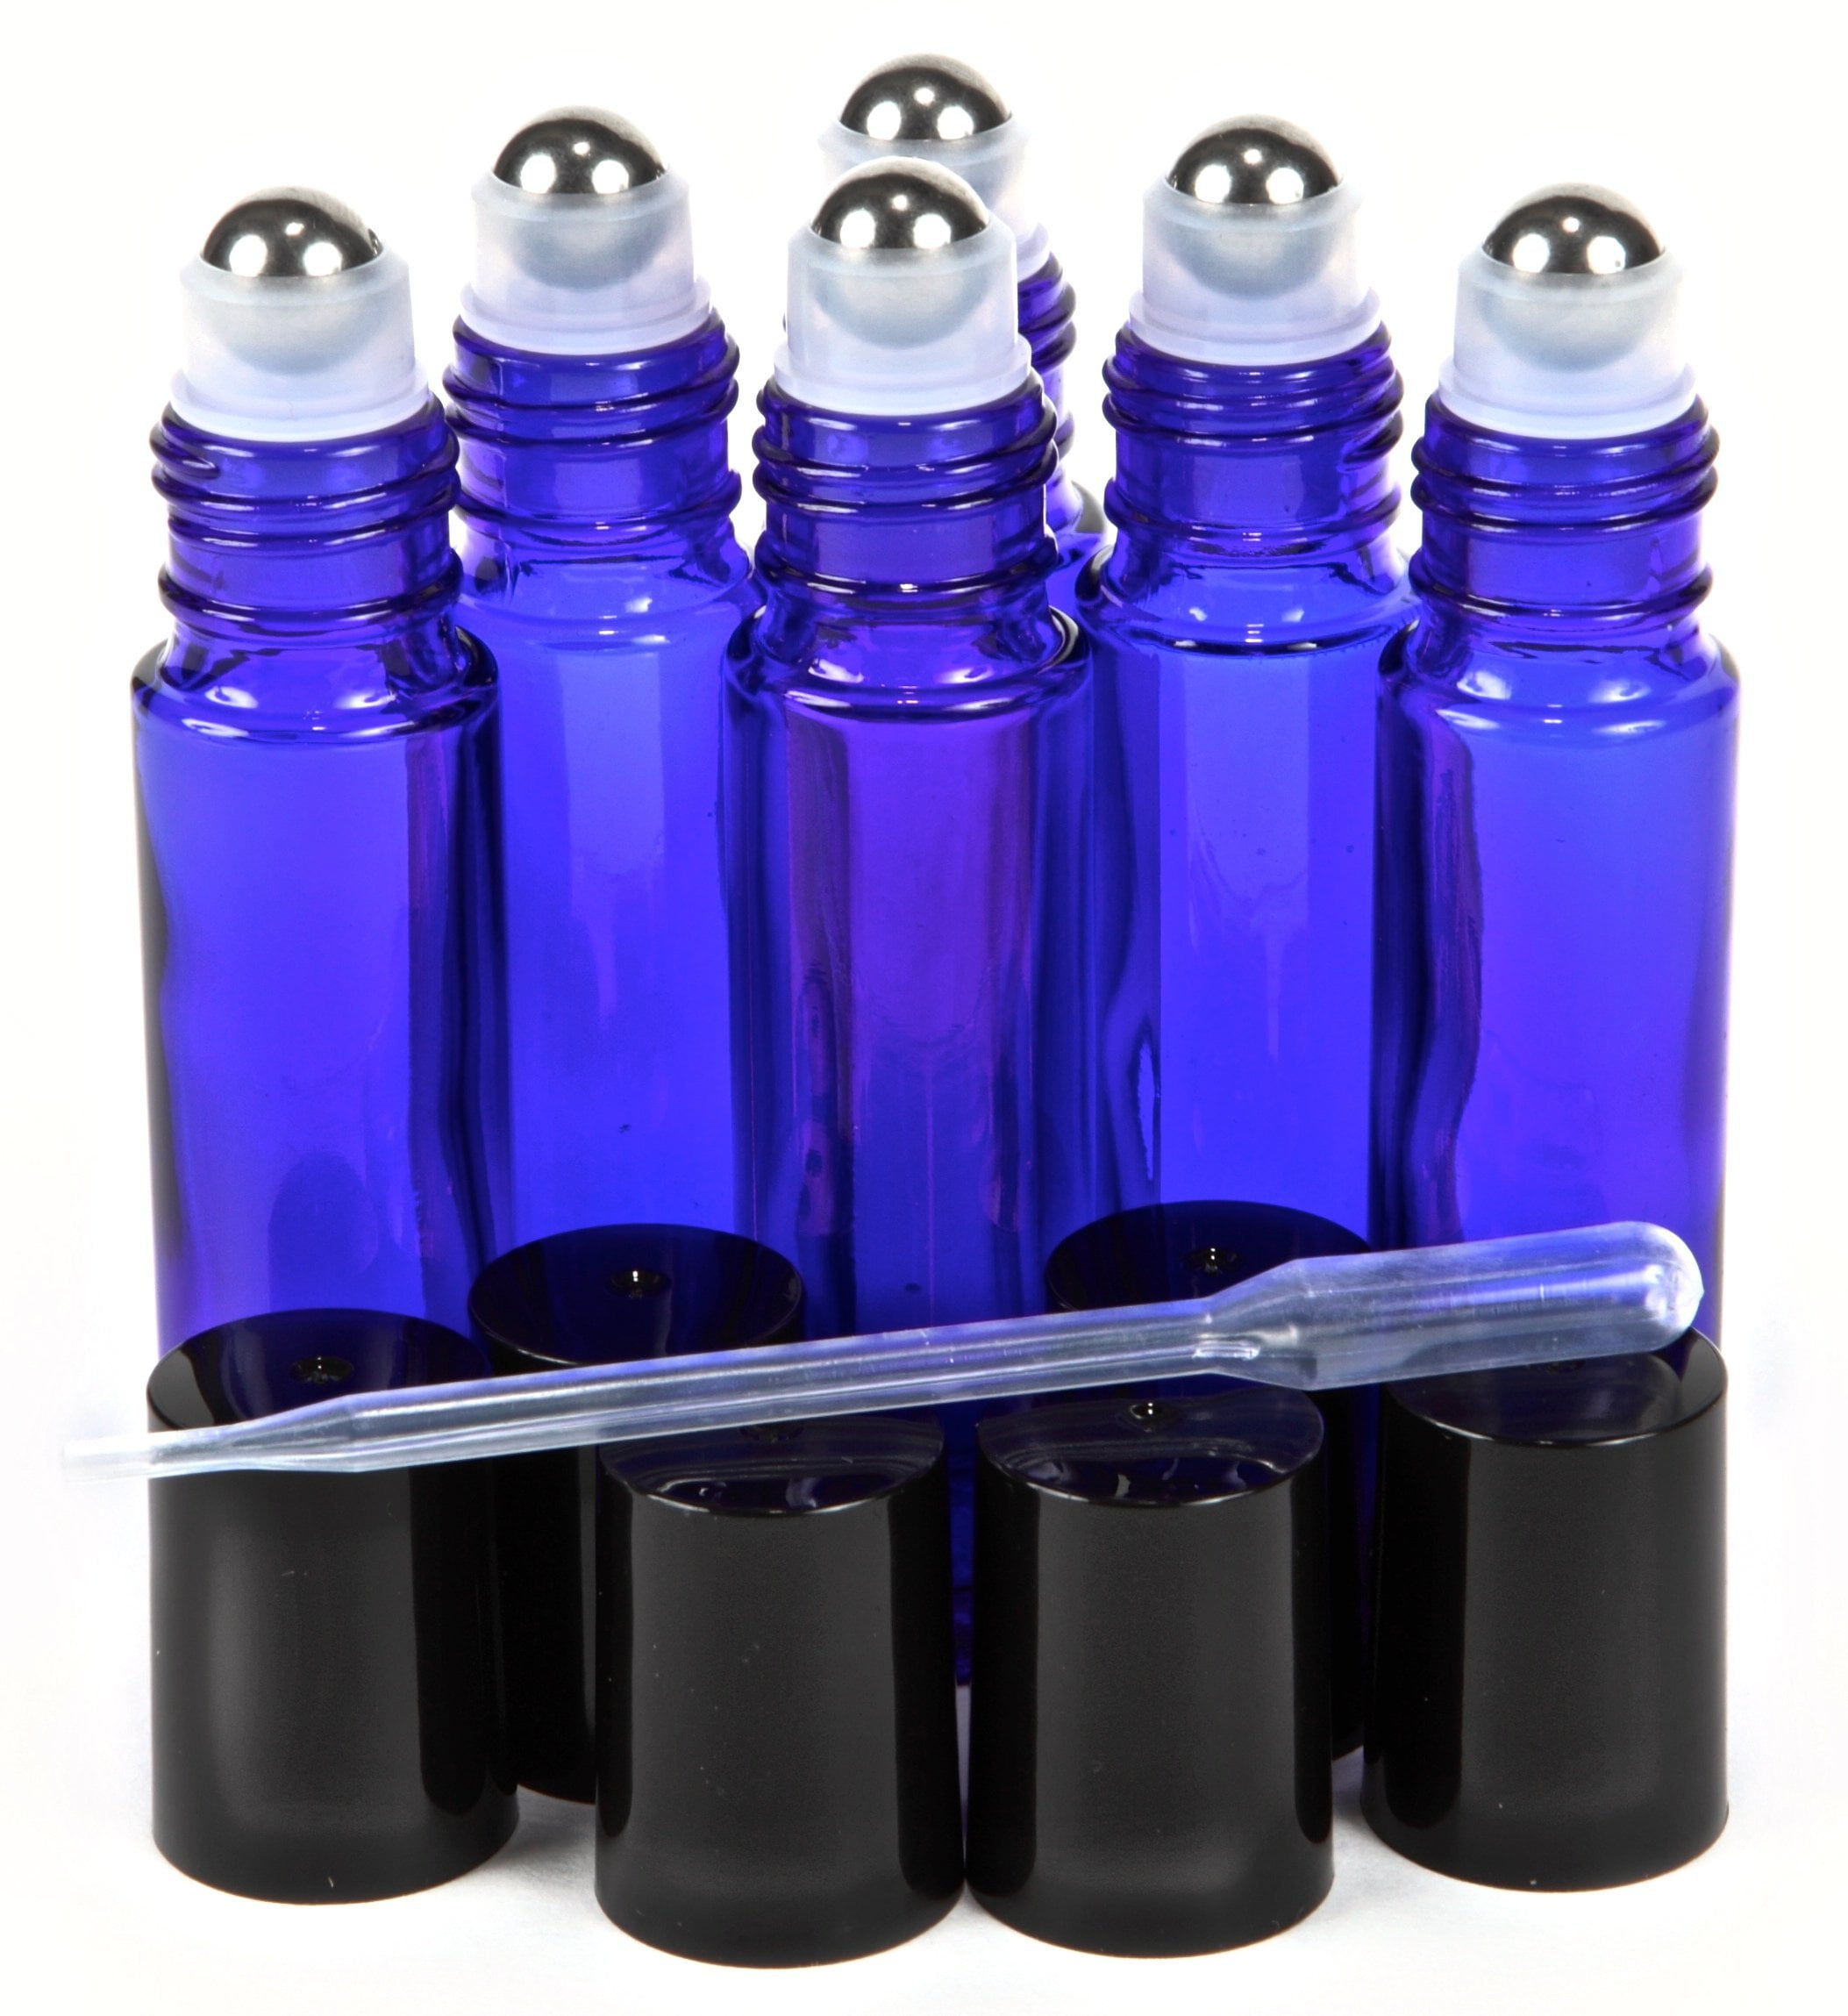 3 Dropper, 6 Extra Roller Balls, 2 Bottle Opener, 30 labels SXUDA Glass Roller Bottles UV Protection 24 Pack 10 ml Cobalt Blue Essential Oil Roller Bottles with Stainless Steel Roller Balls 